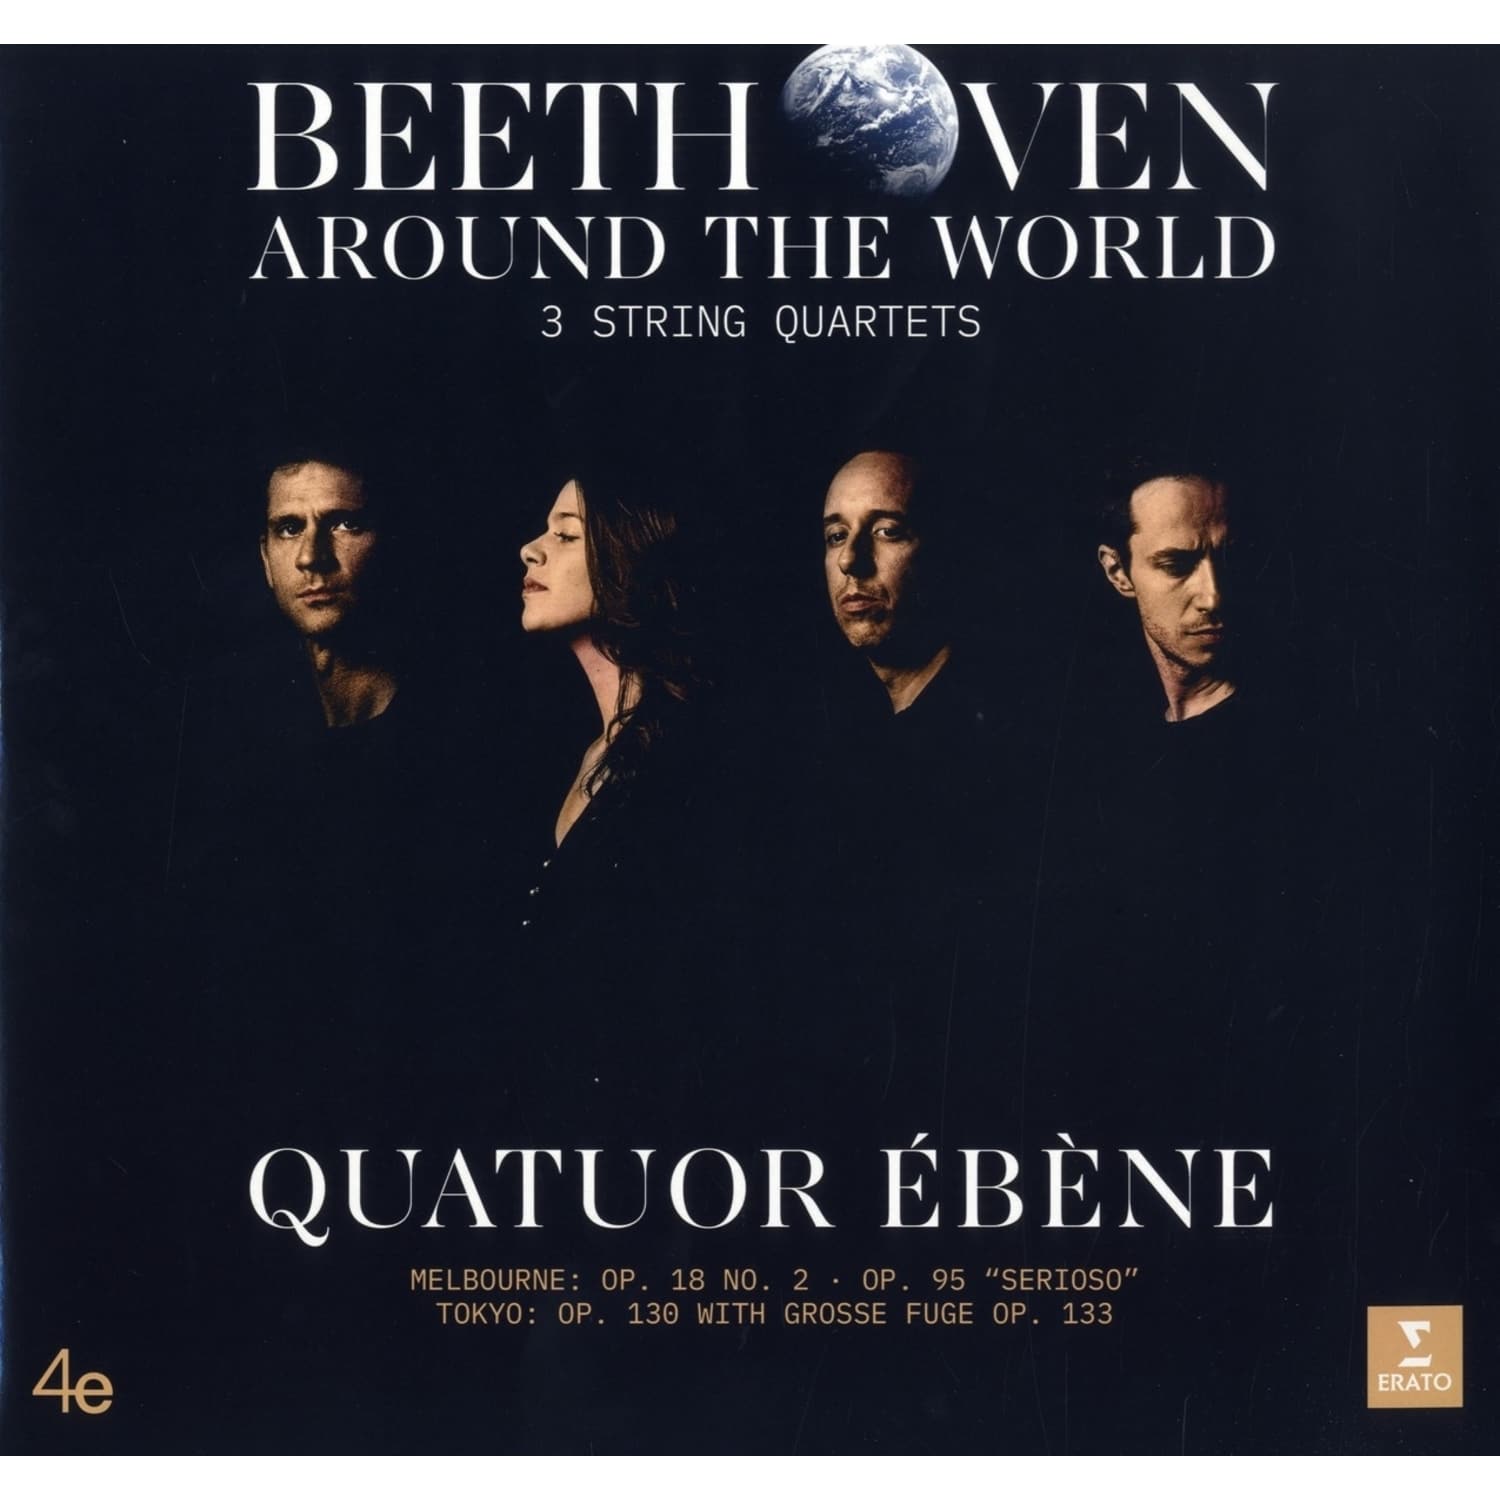 Quatuor bne - BEETHOVEN AROUND THE WORLD: MELBOURNE, TOKYO, STRI 